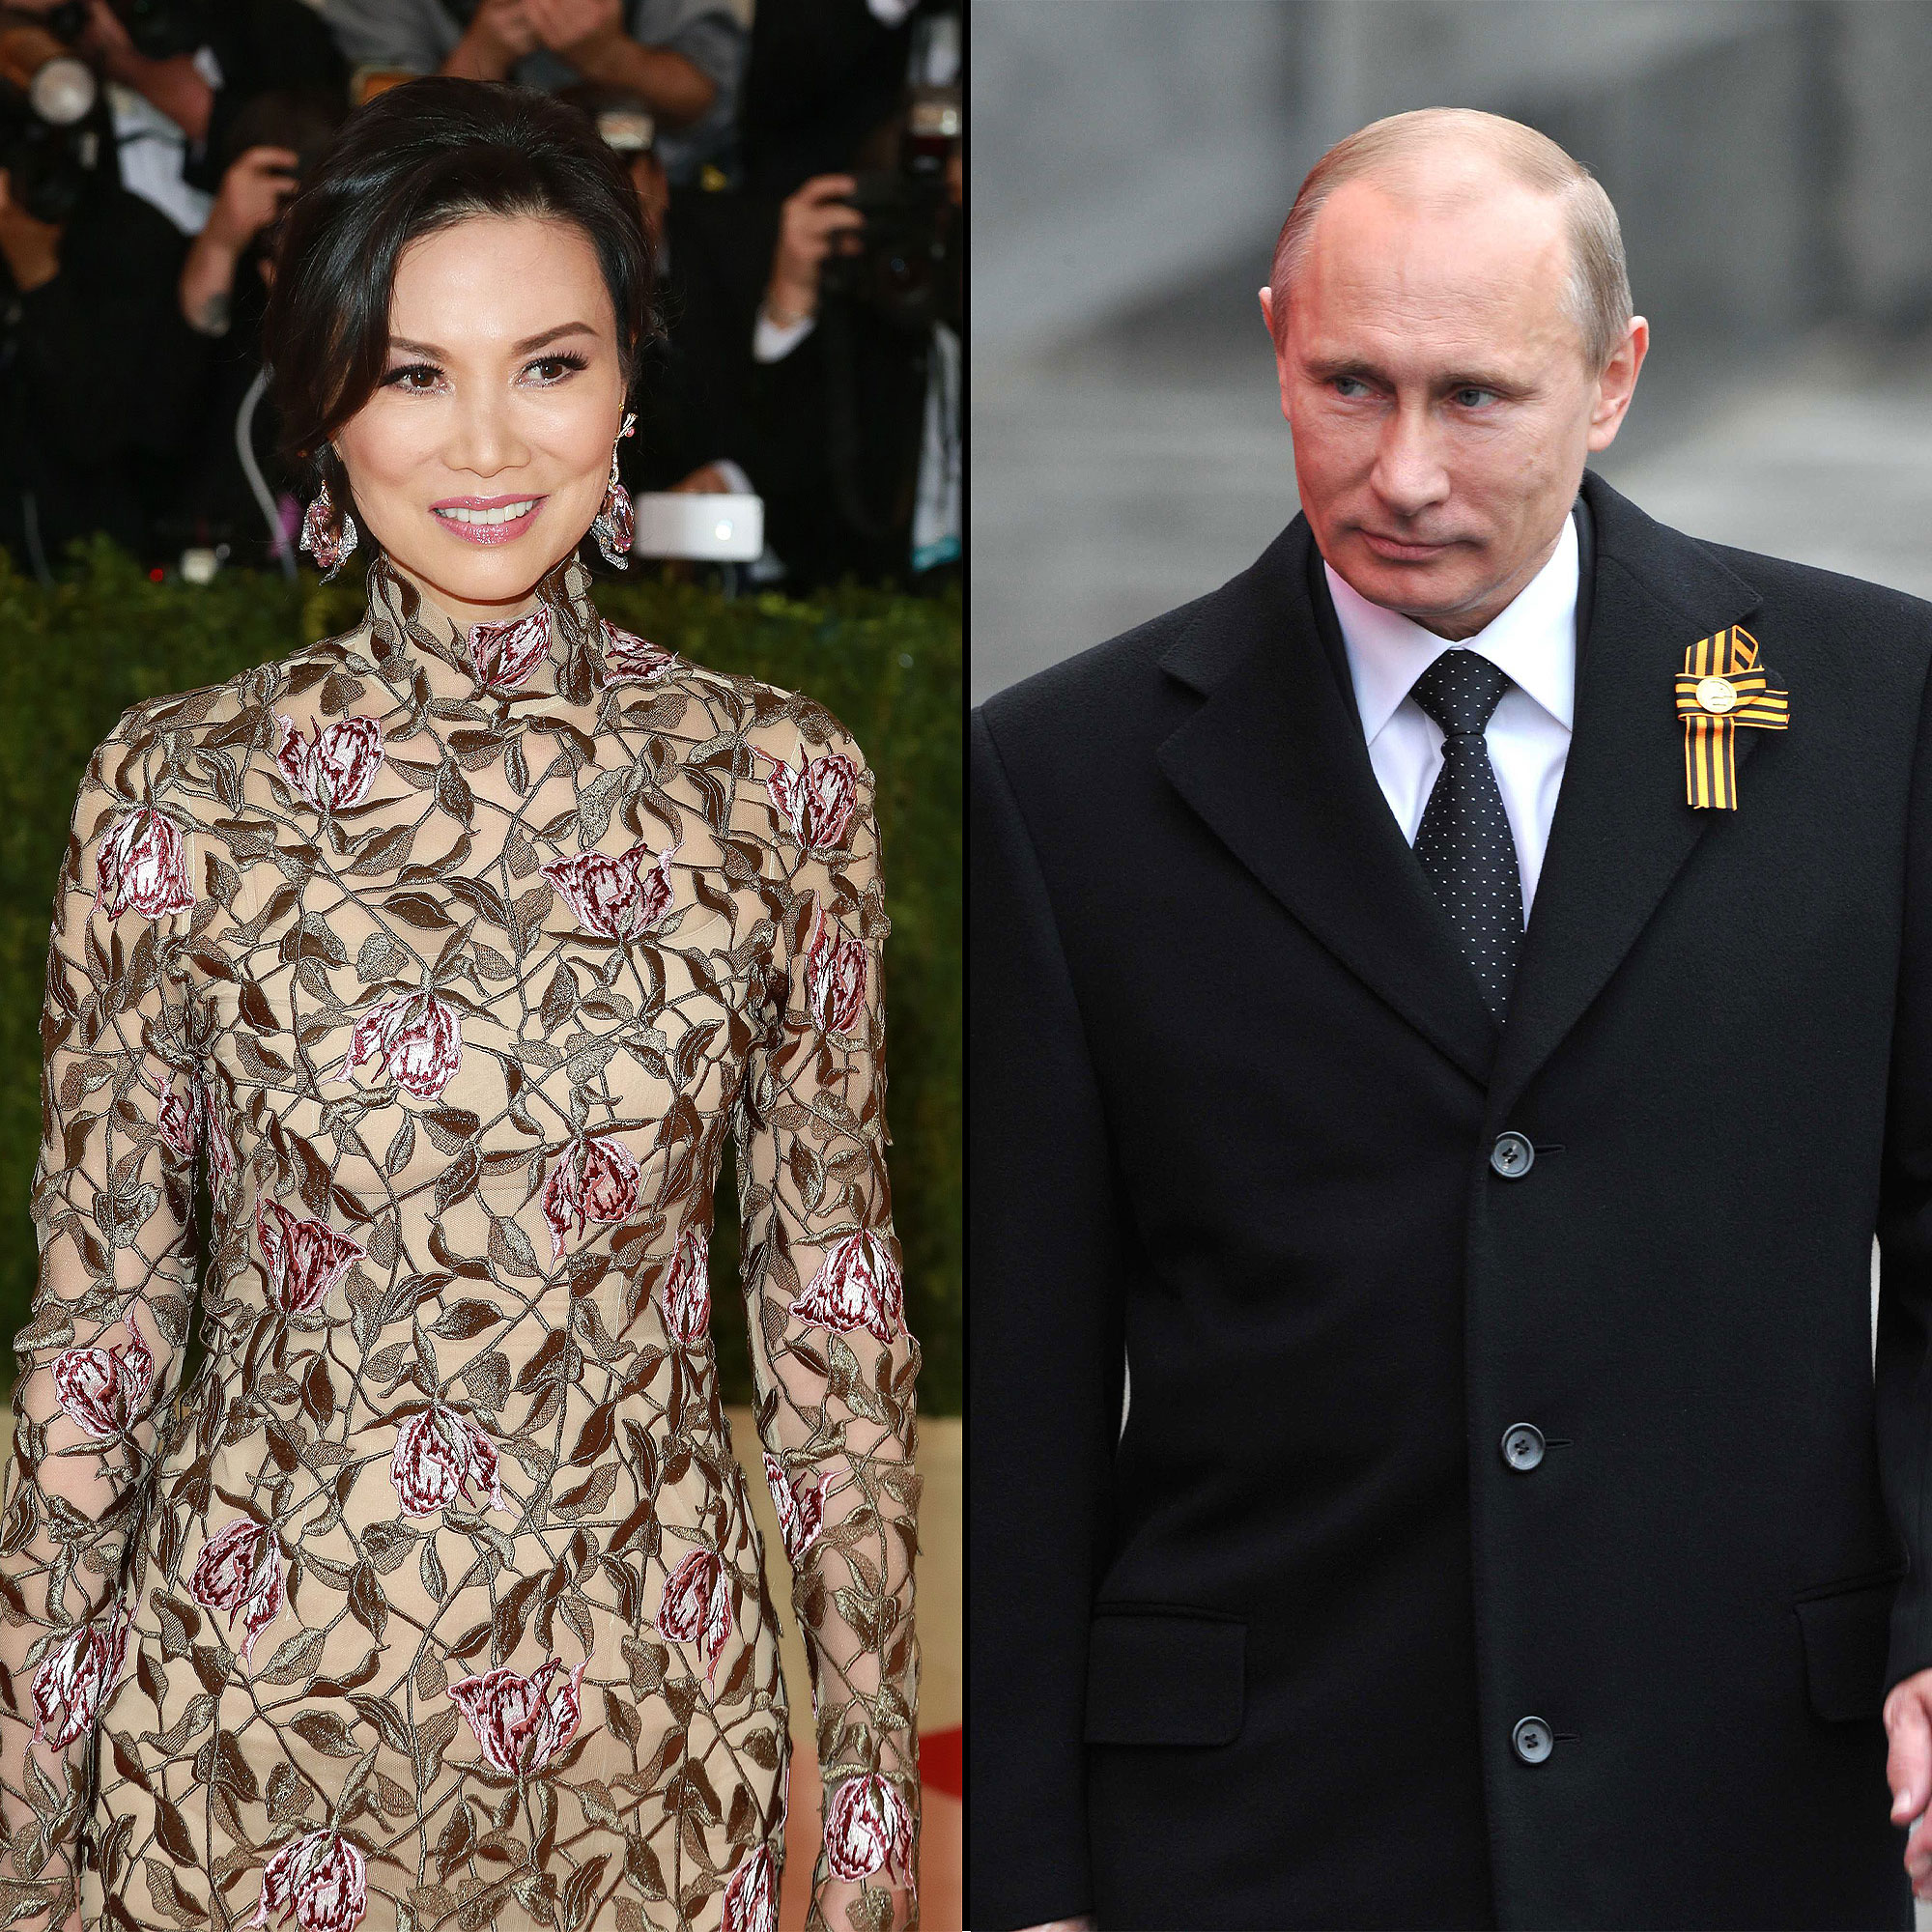 Rupert Murdochs Ex-Wife Wendi Deng Is Dating Vladimir Putin pic